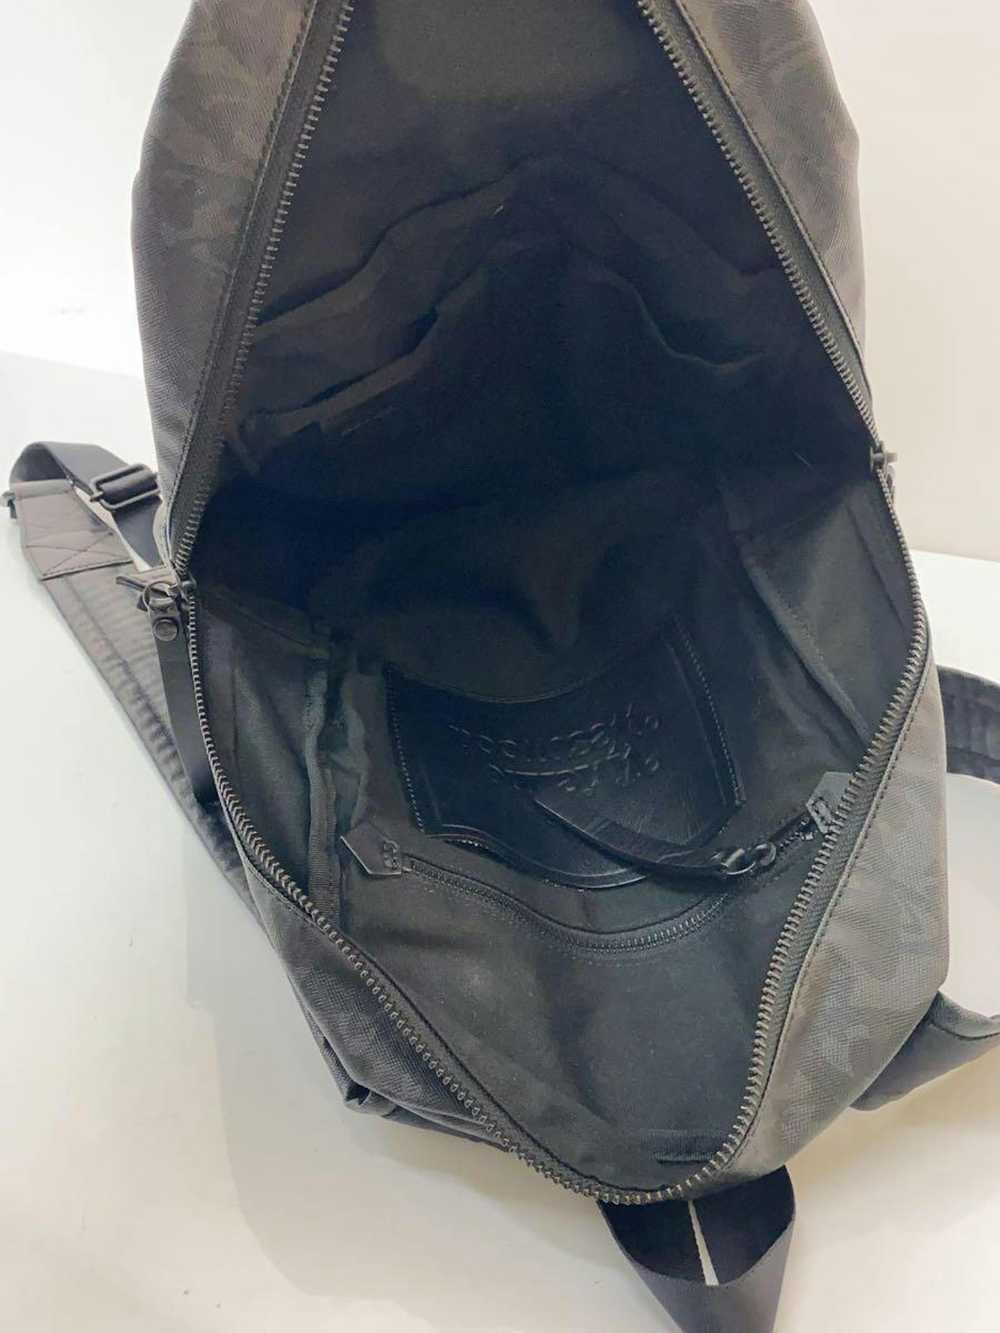 Vivienne Westwood 🐎 Orb Camo Backpack - image 6